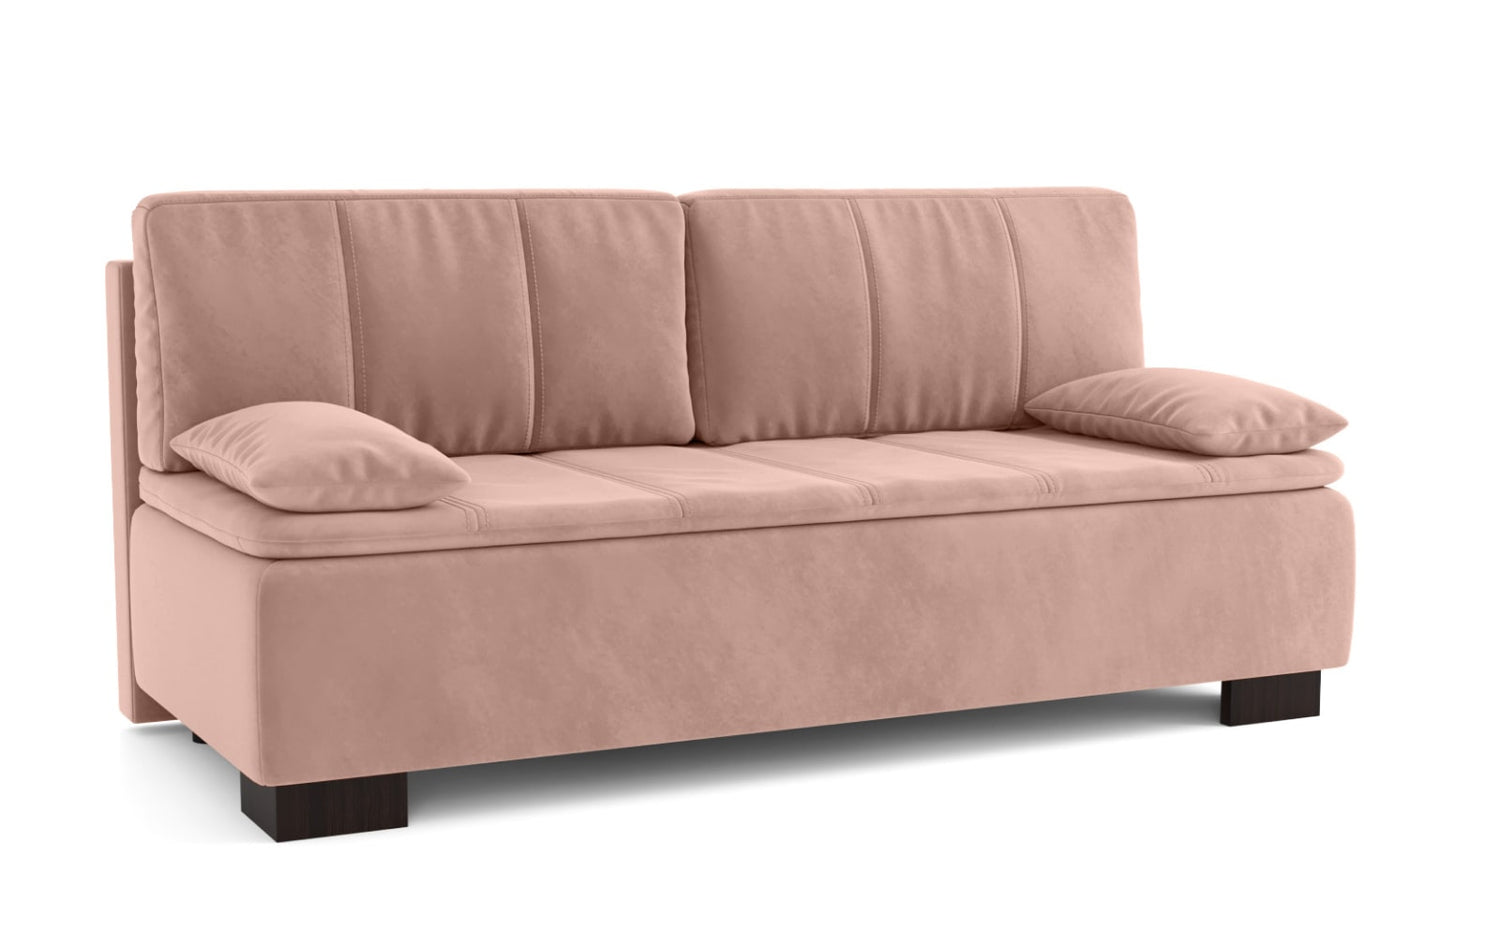 Trenton Sofa Bed